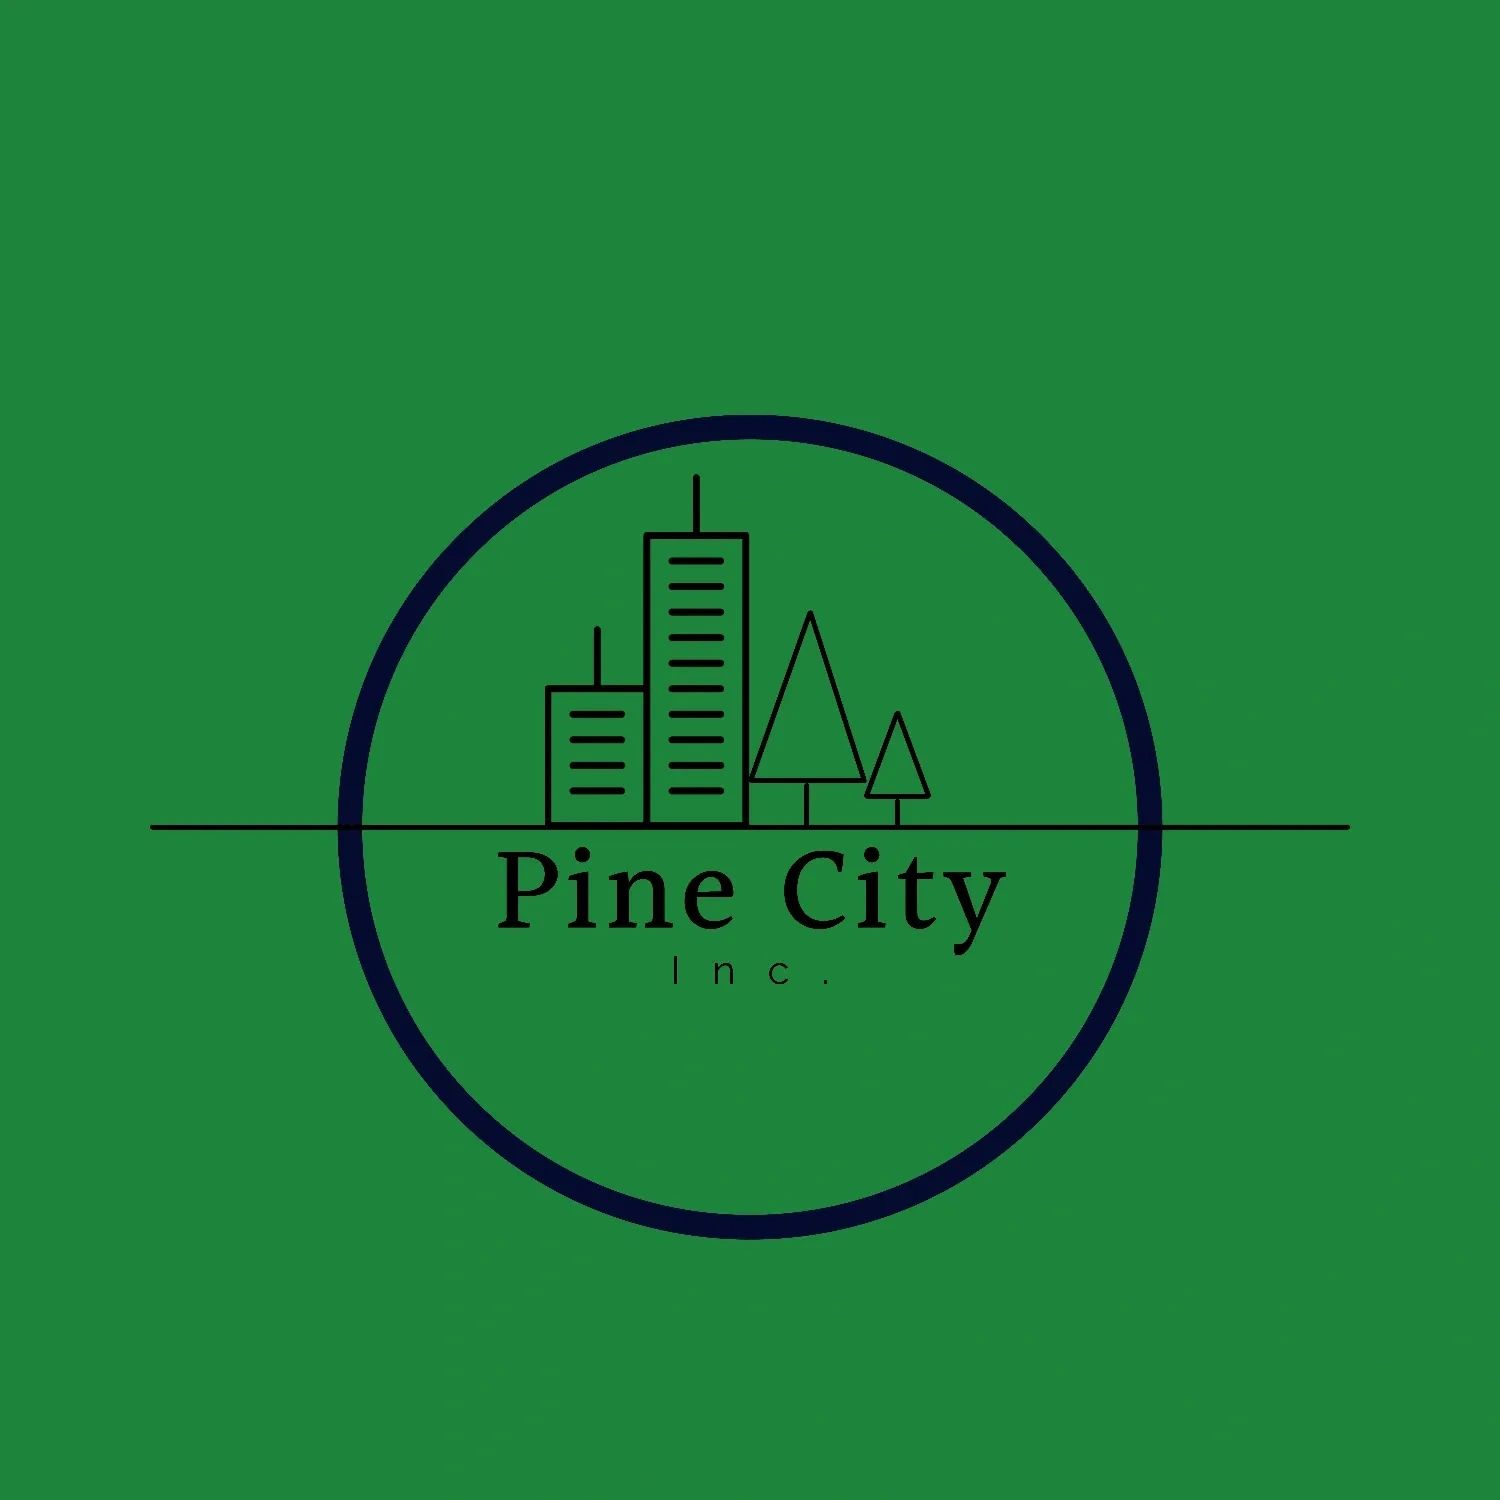 Pine City Inc